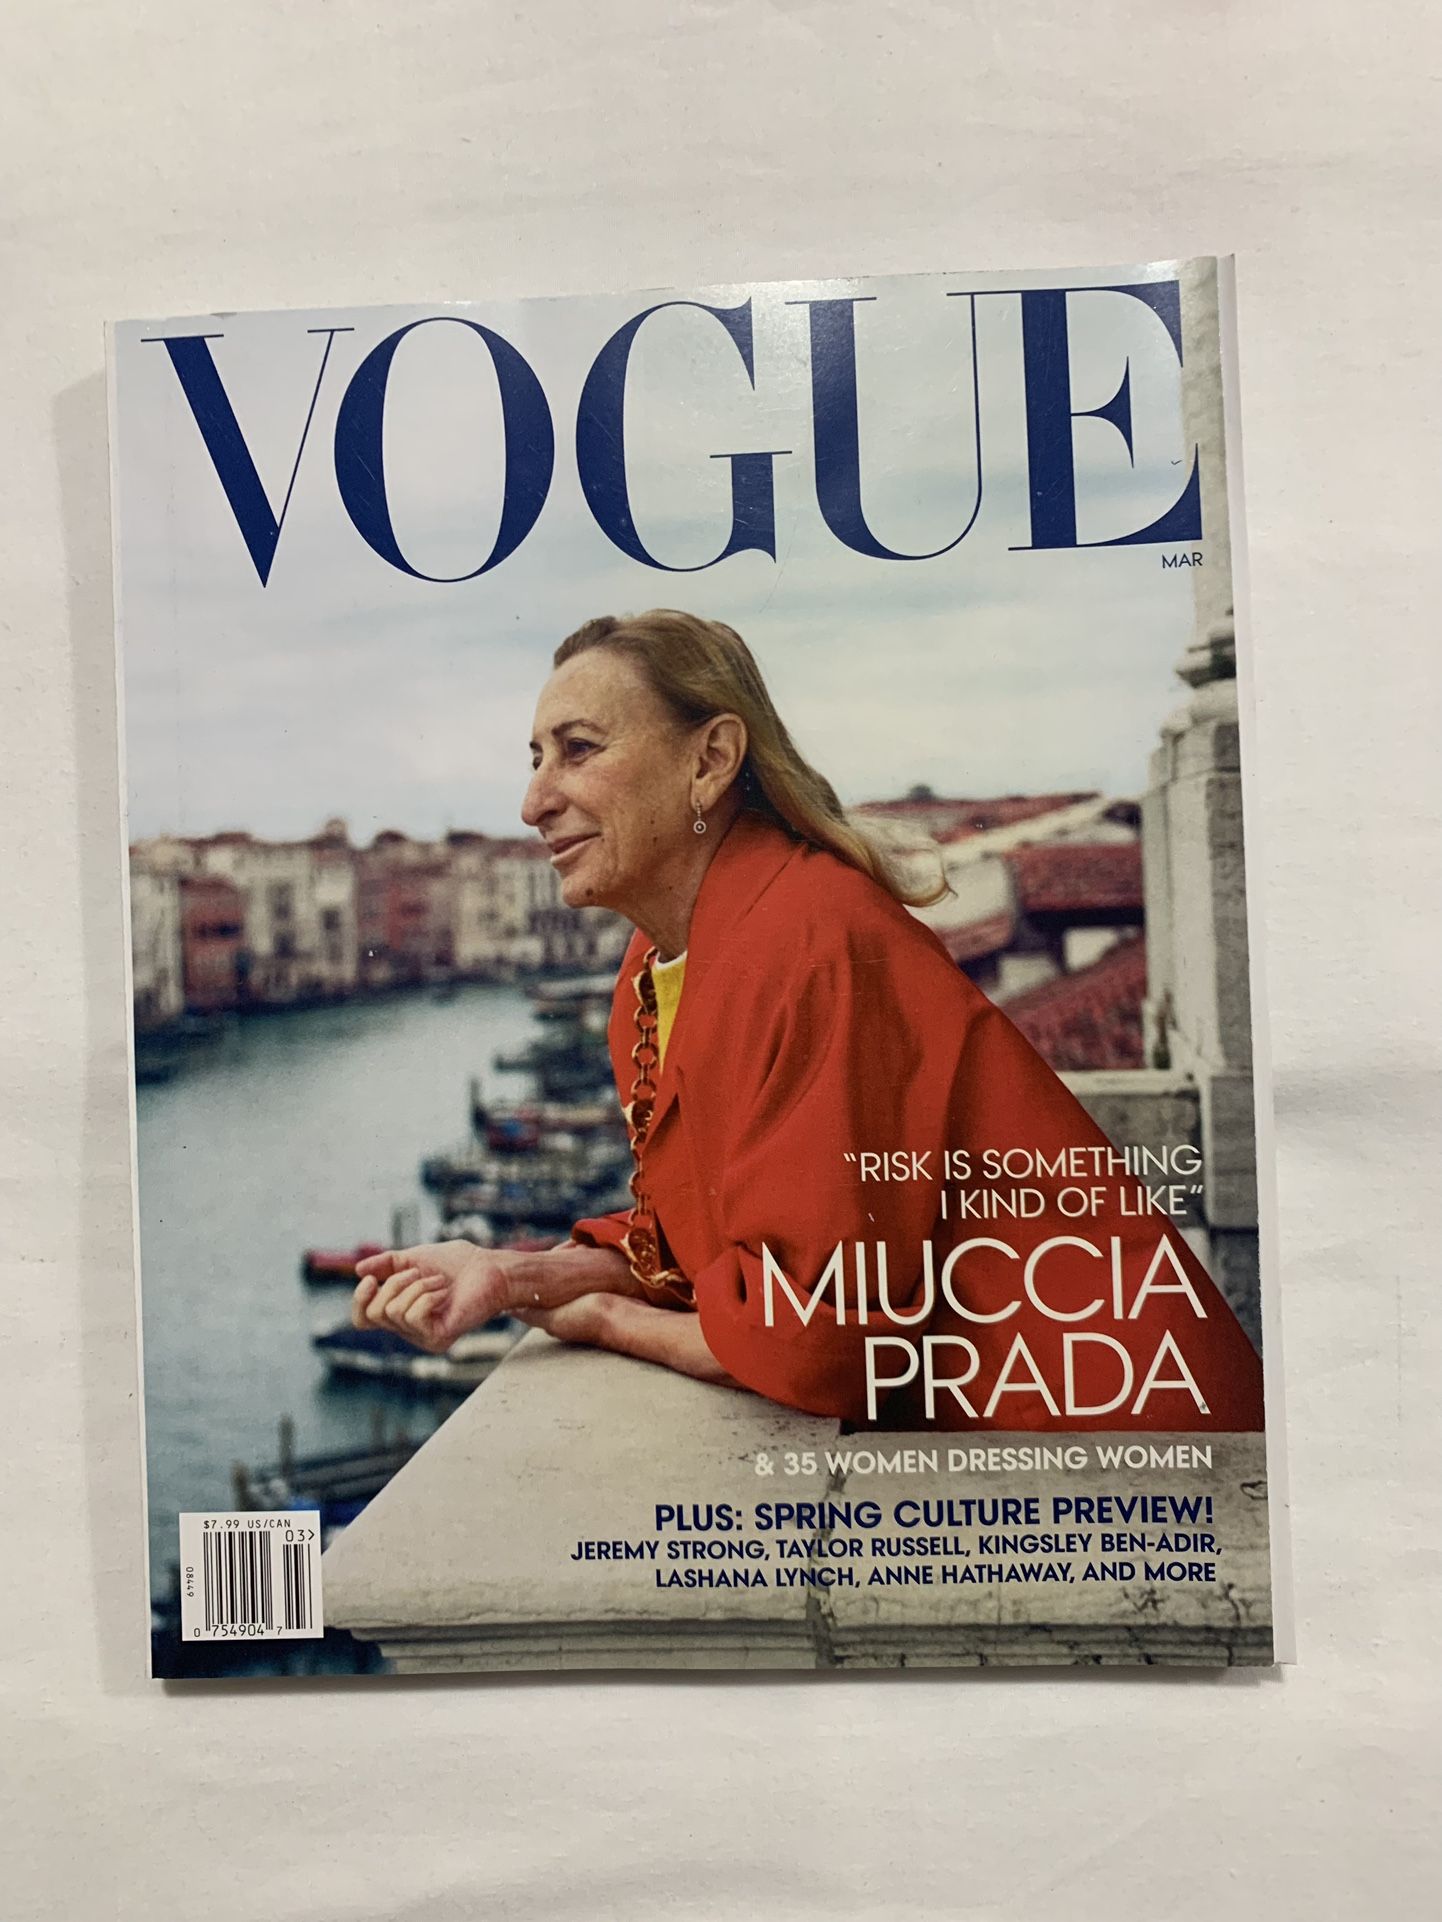 Vogue Miuccia Prada “Risk is Something I Kind of Like” Issue March 2024 Magazine